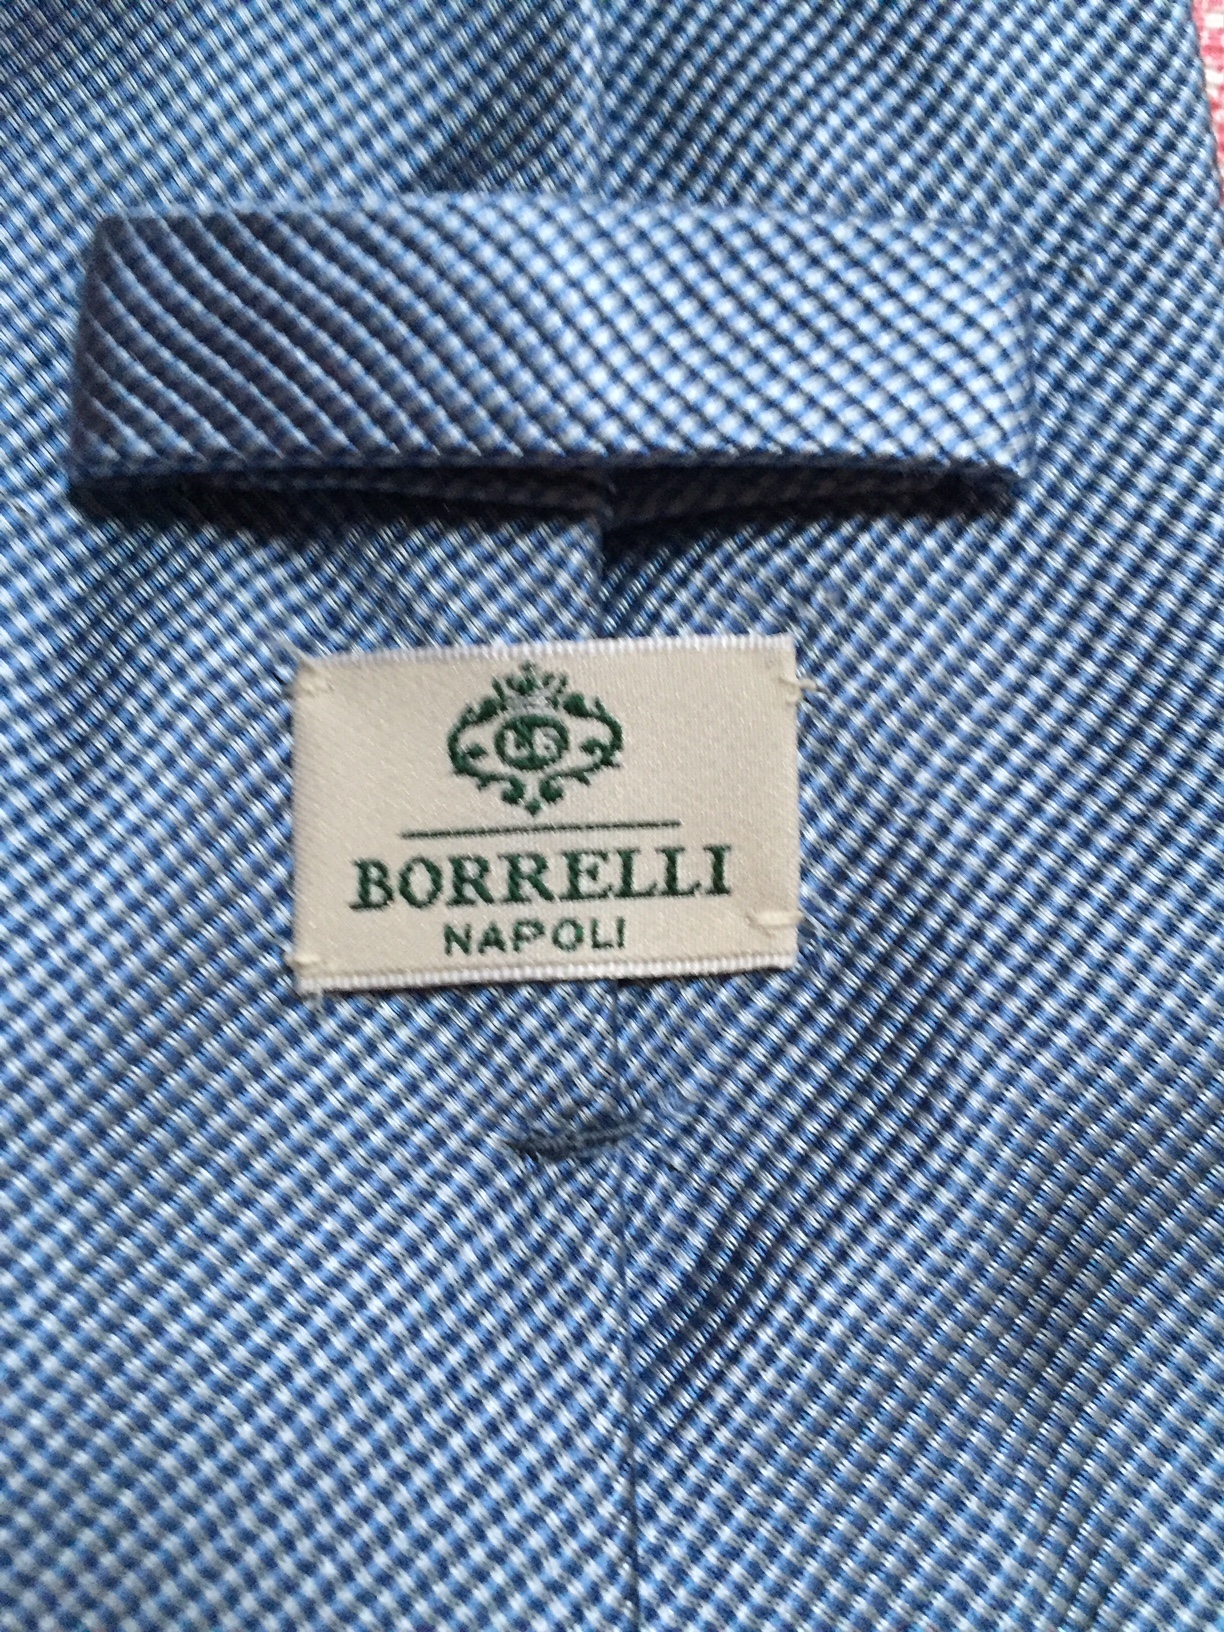 Borrelli Label 2 (New?)